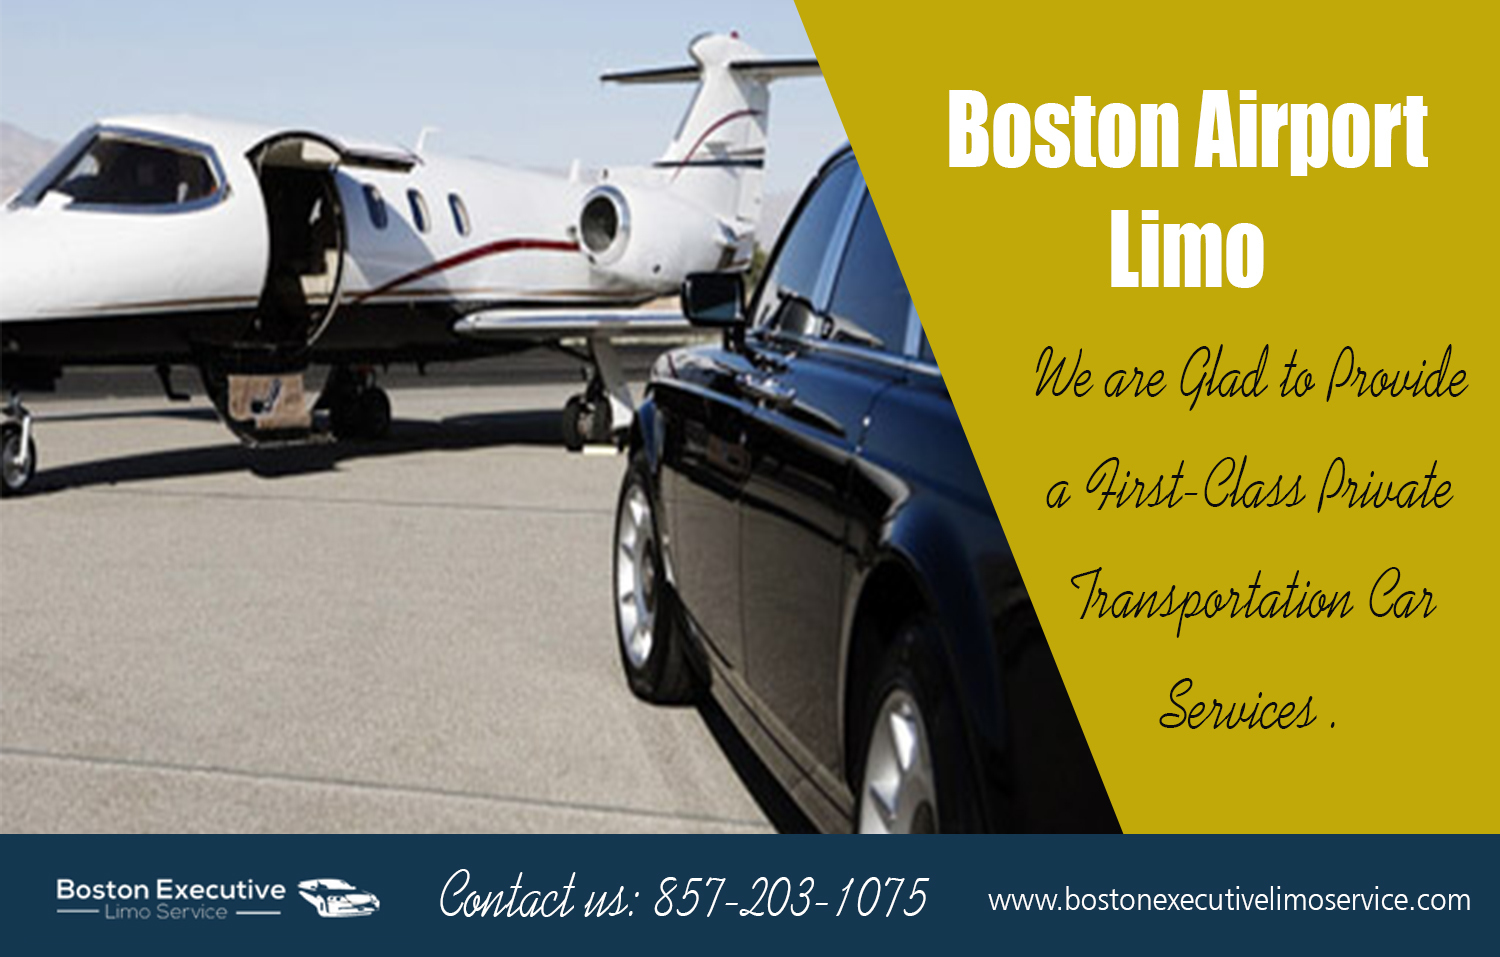 Boston limo | 857-203-1075 | bostonexecutivelimoservice.com